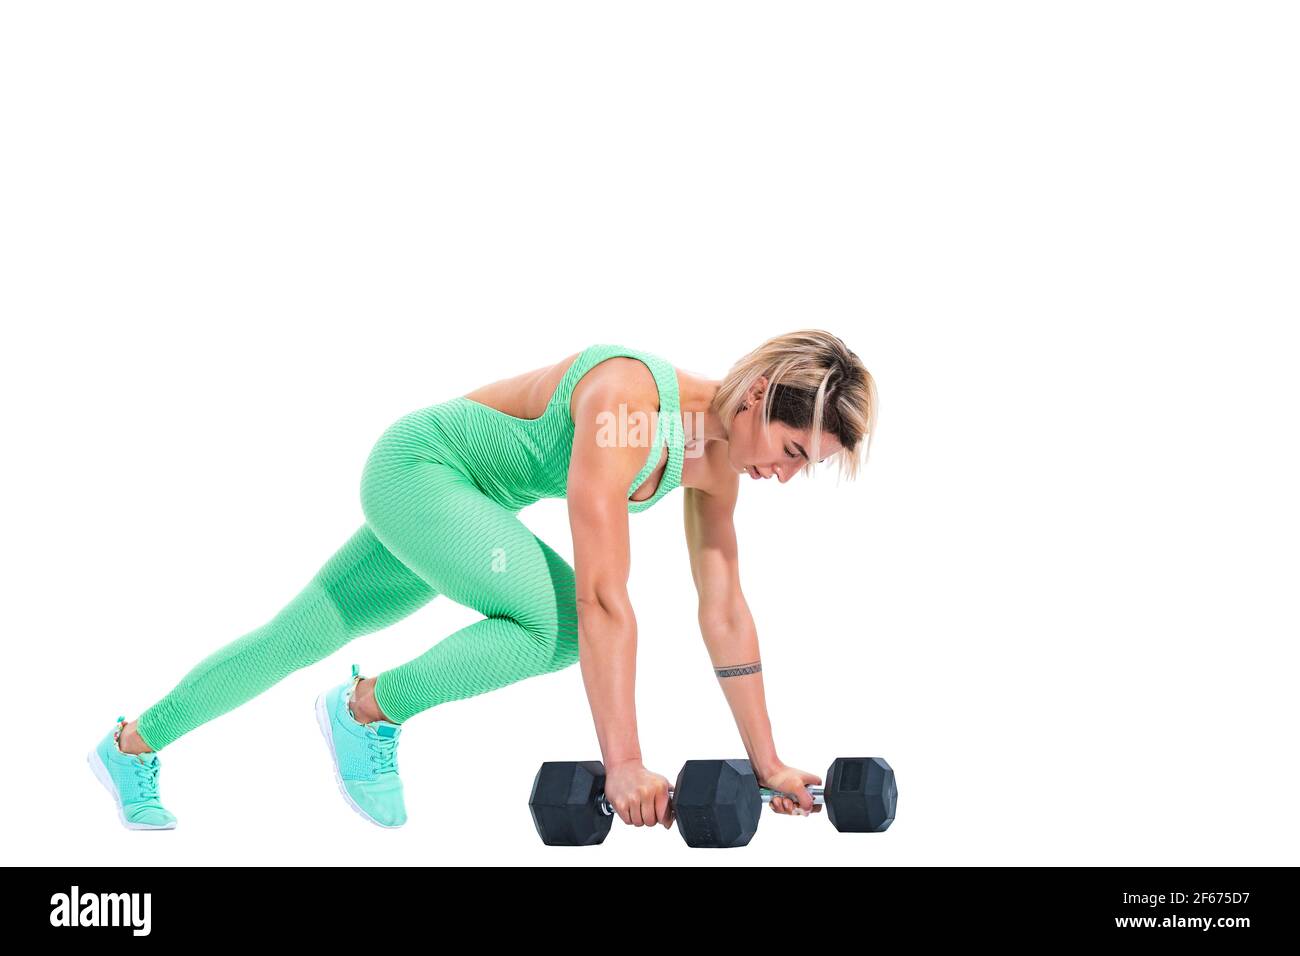 woman doing plank exercise on dumbbells isolated over white background Stock Photo